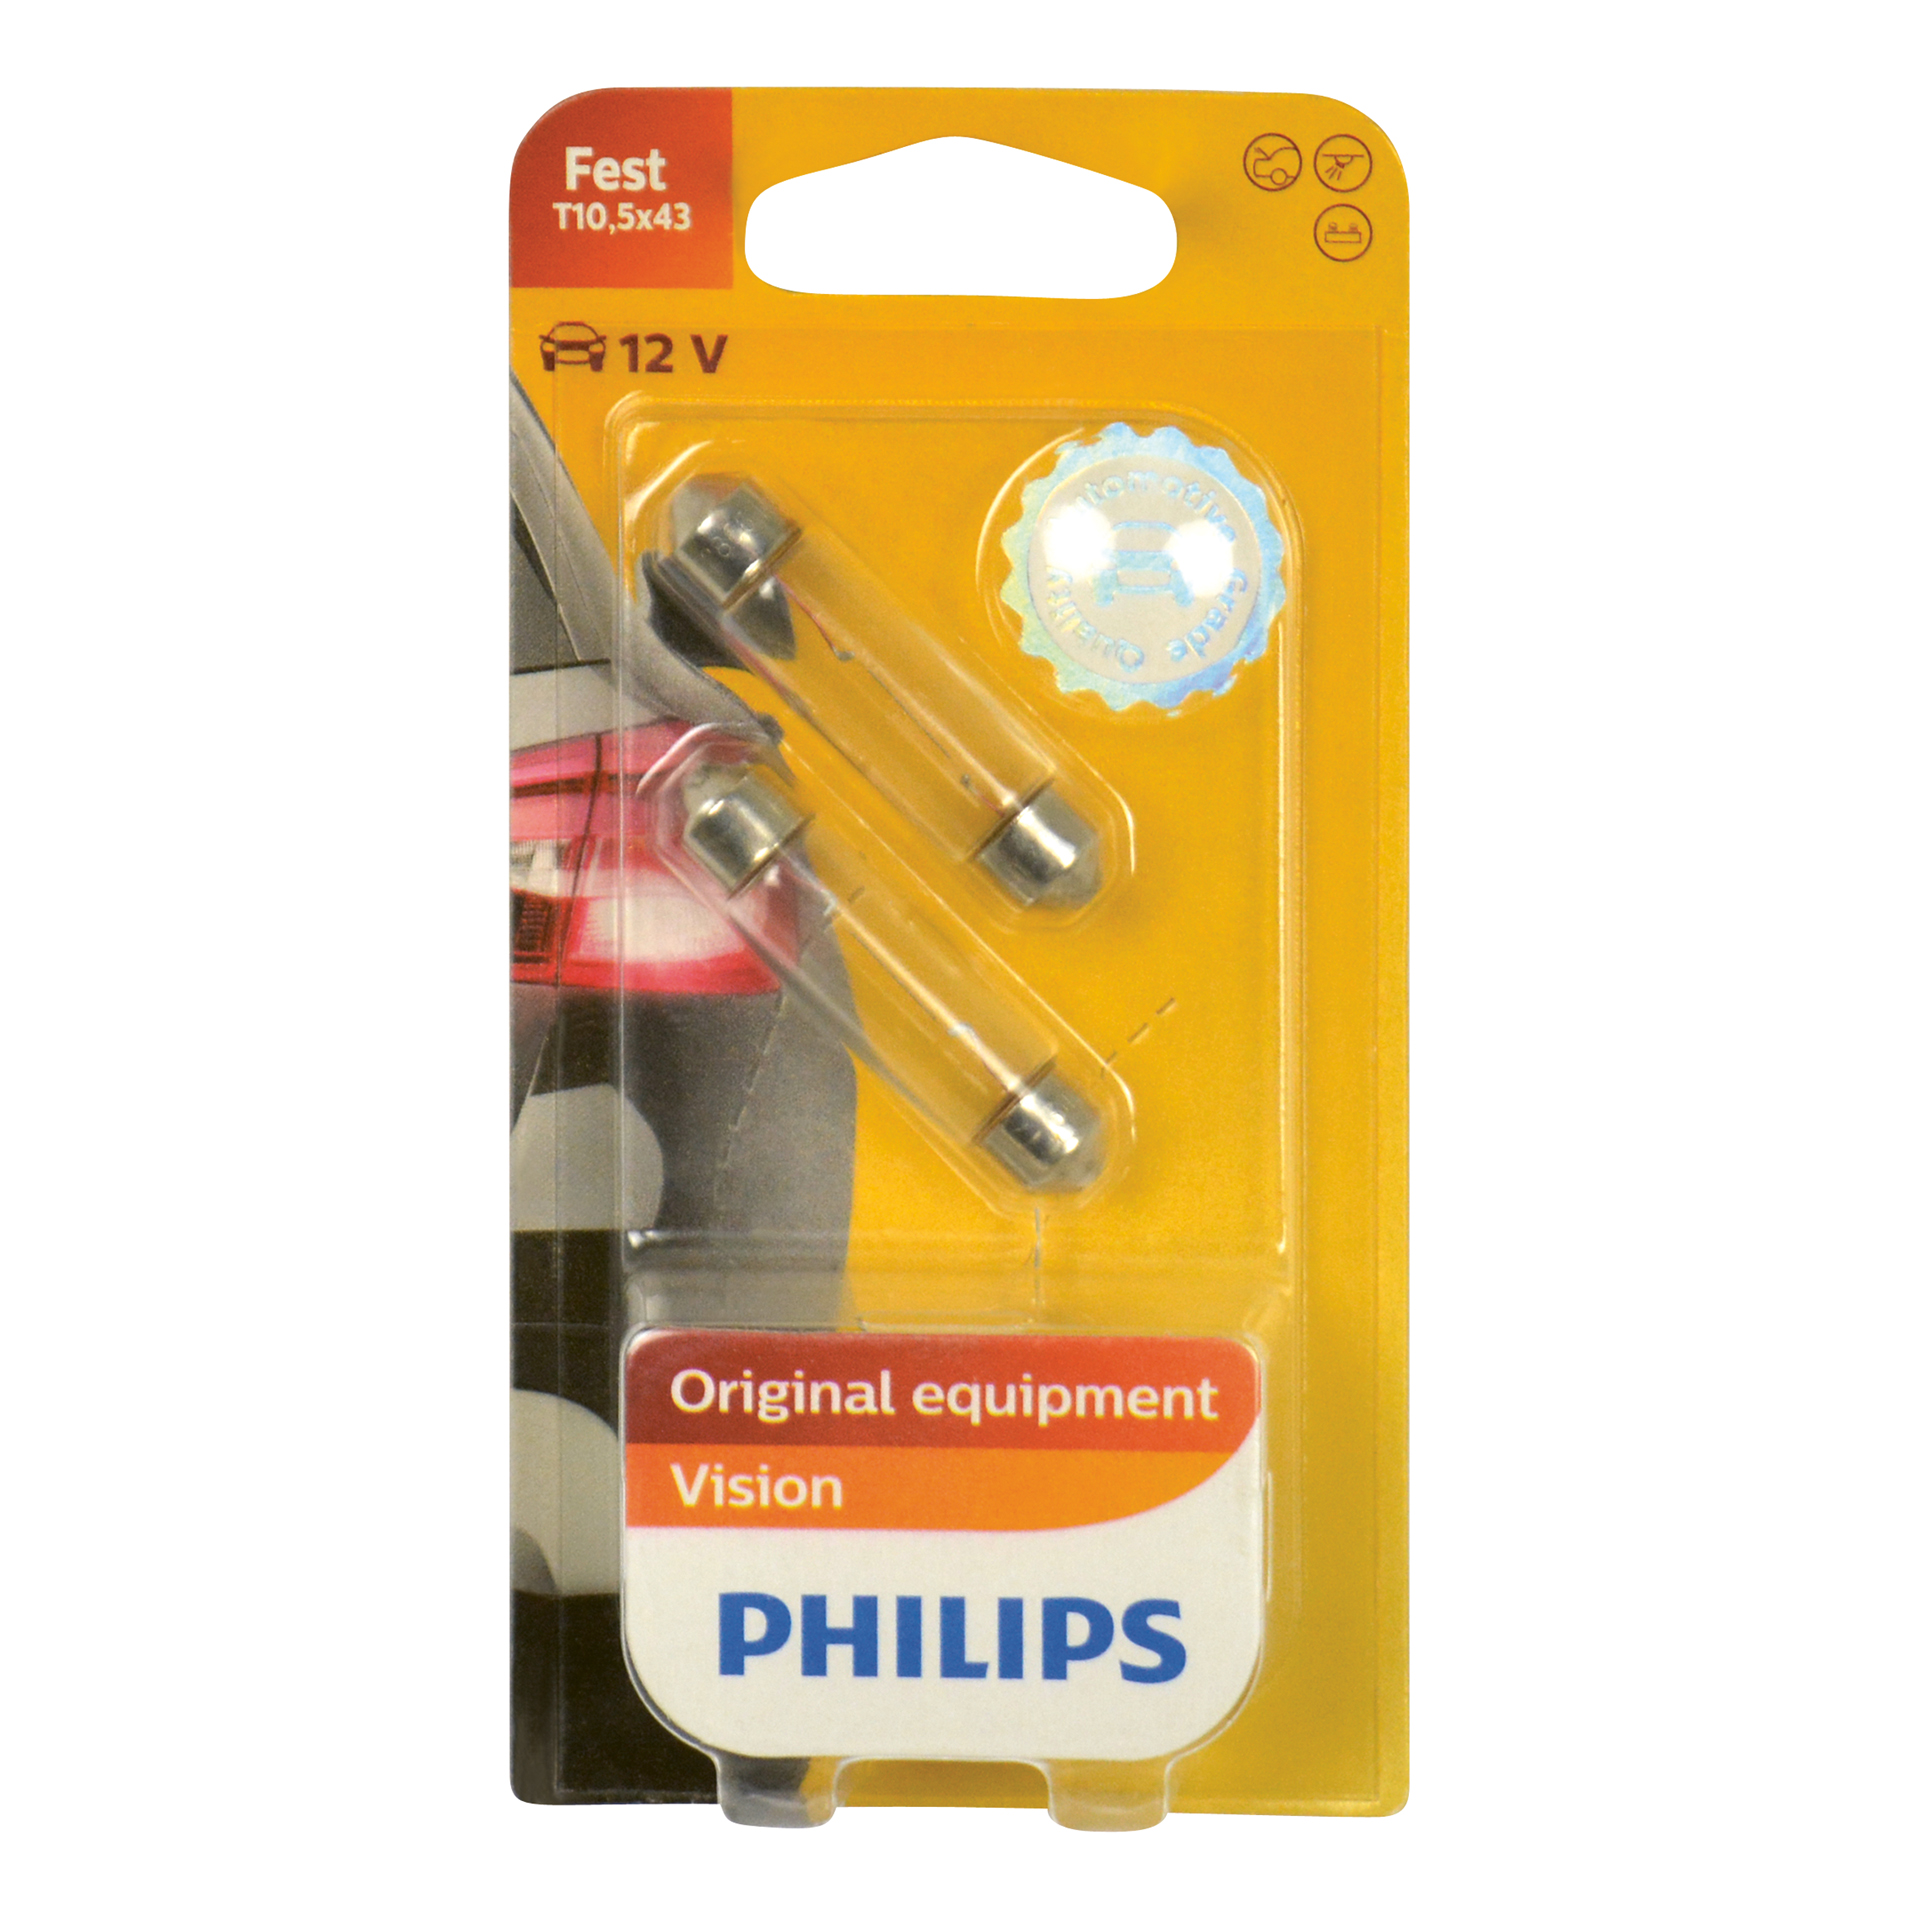 Philips Philips 12866B2 C10W Festoon Vision 0730020